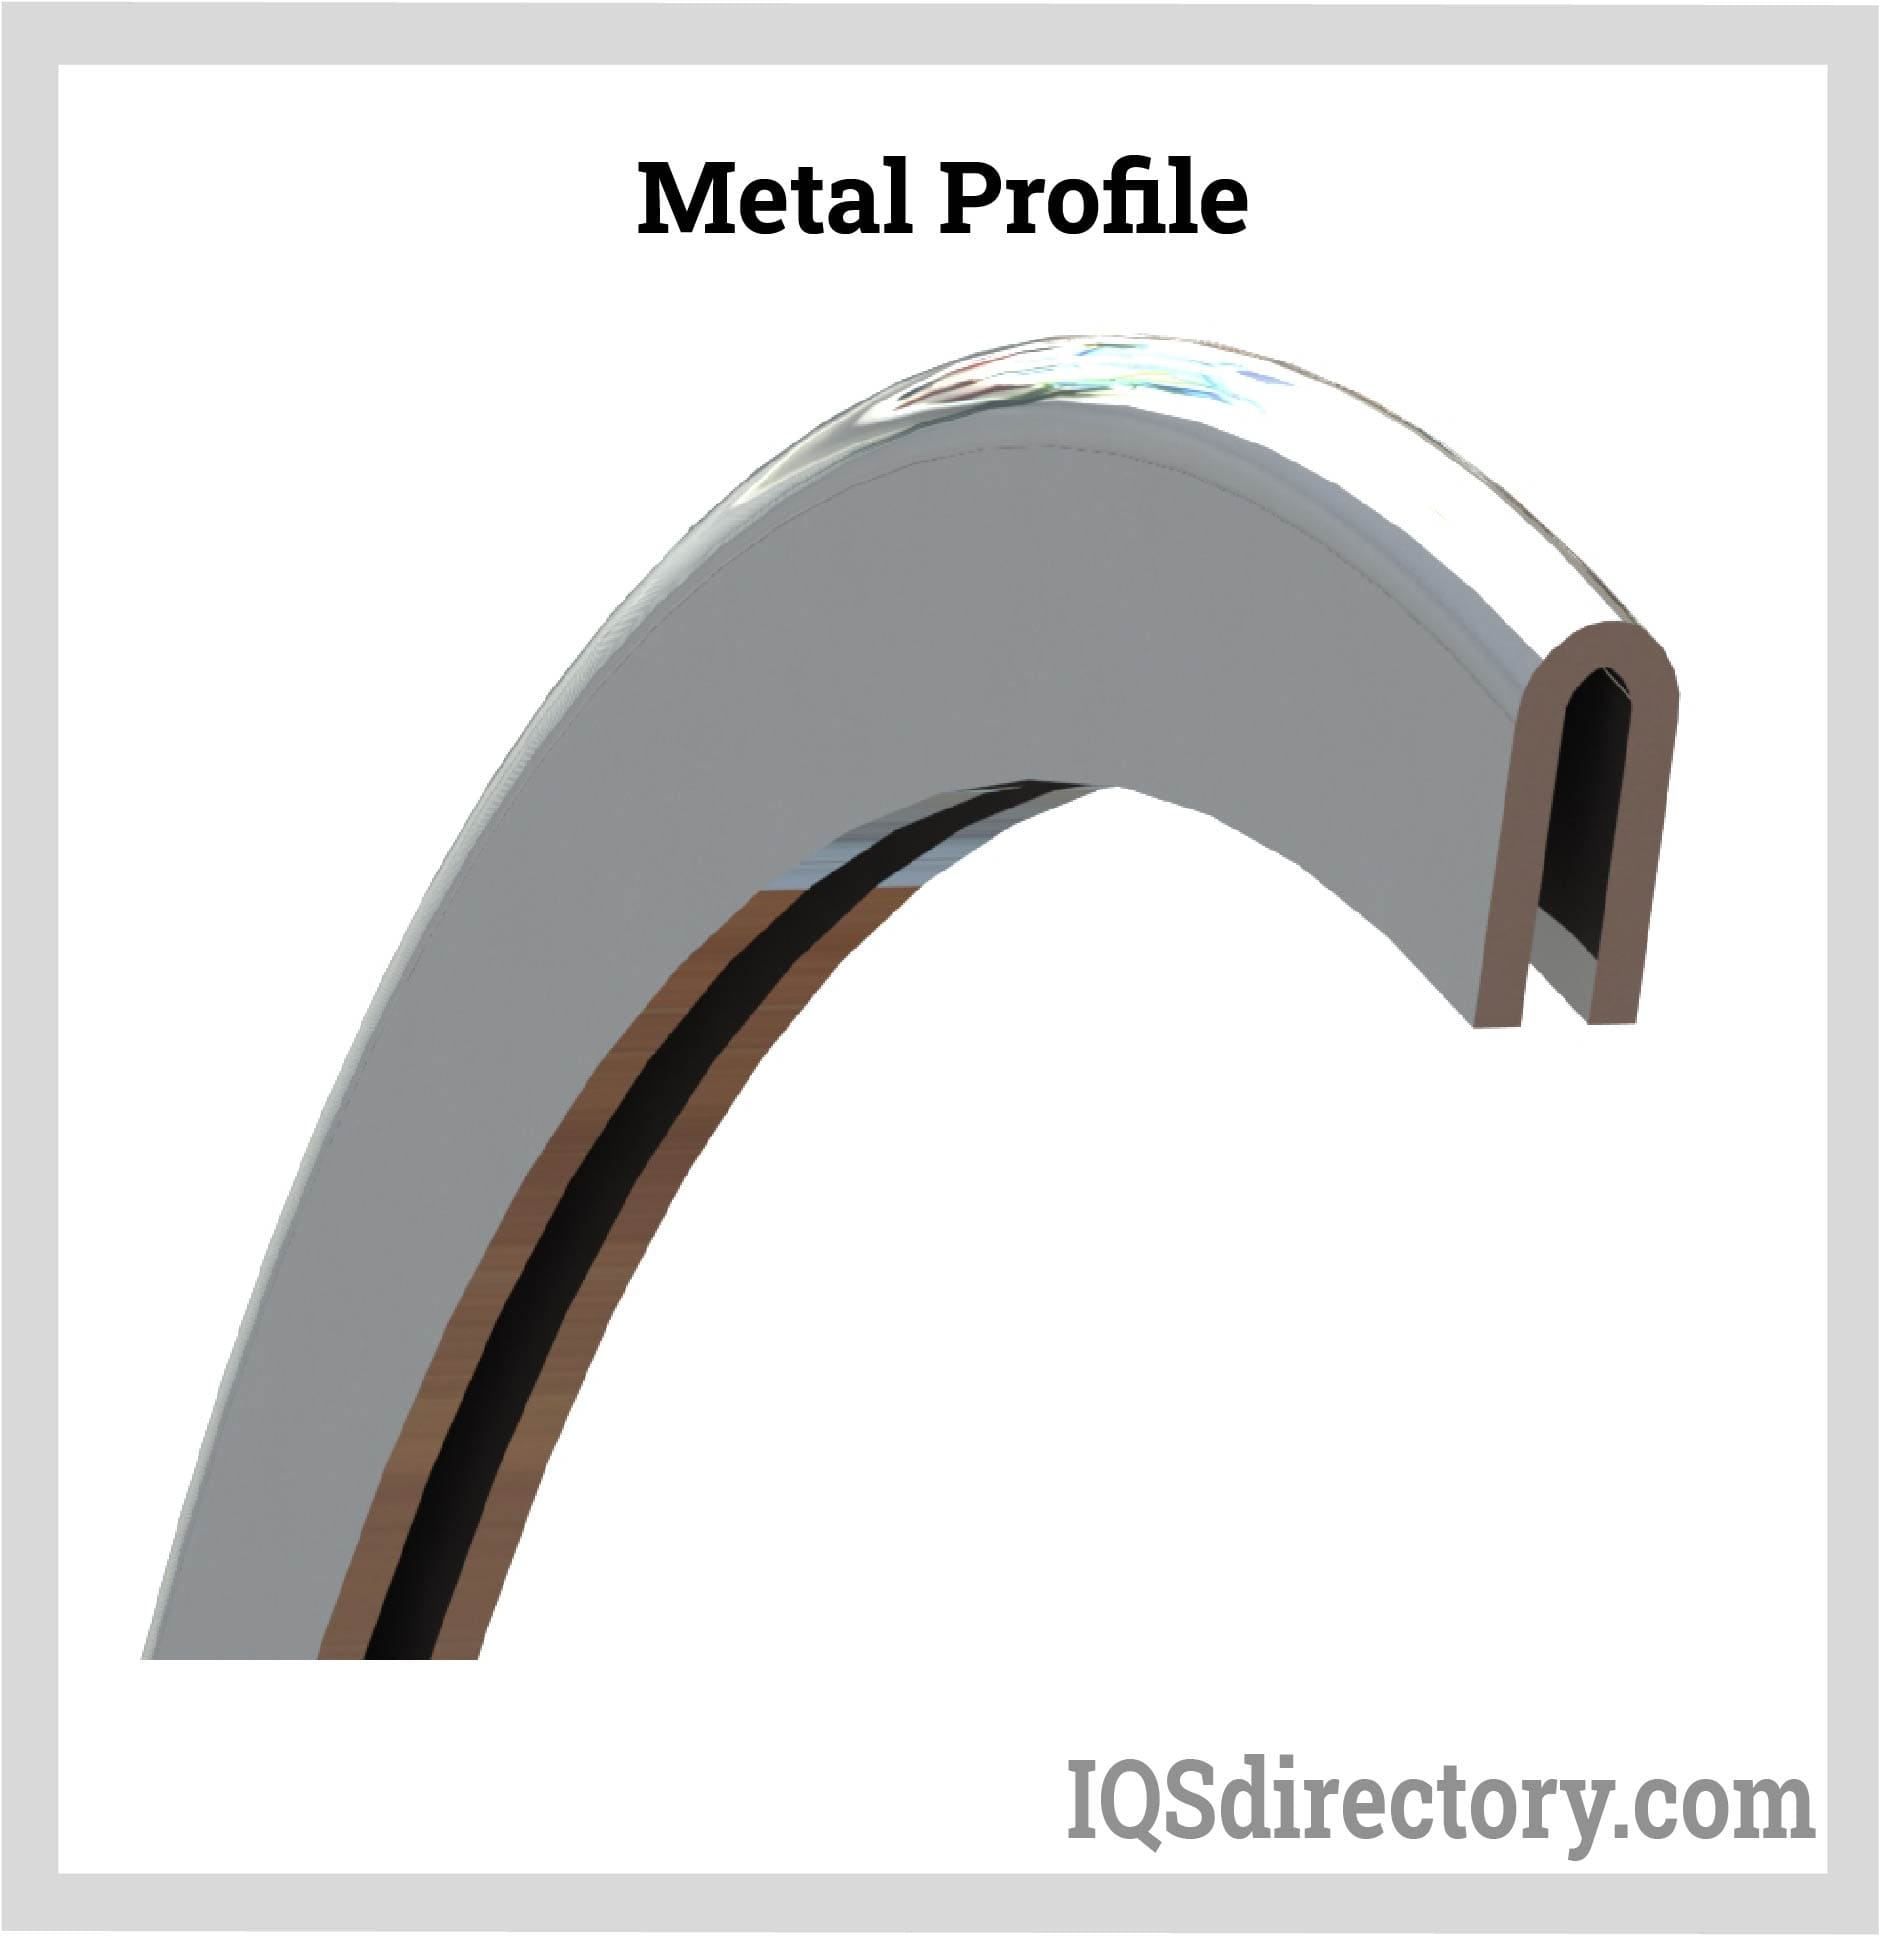 Metal Profile